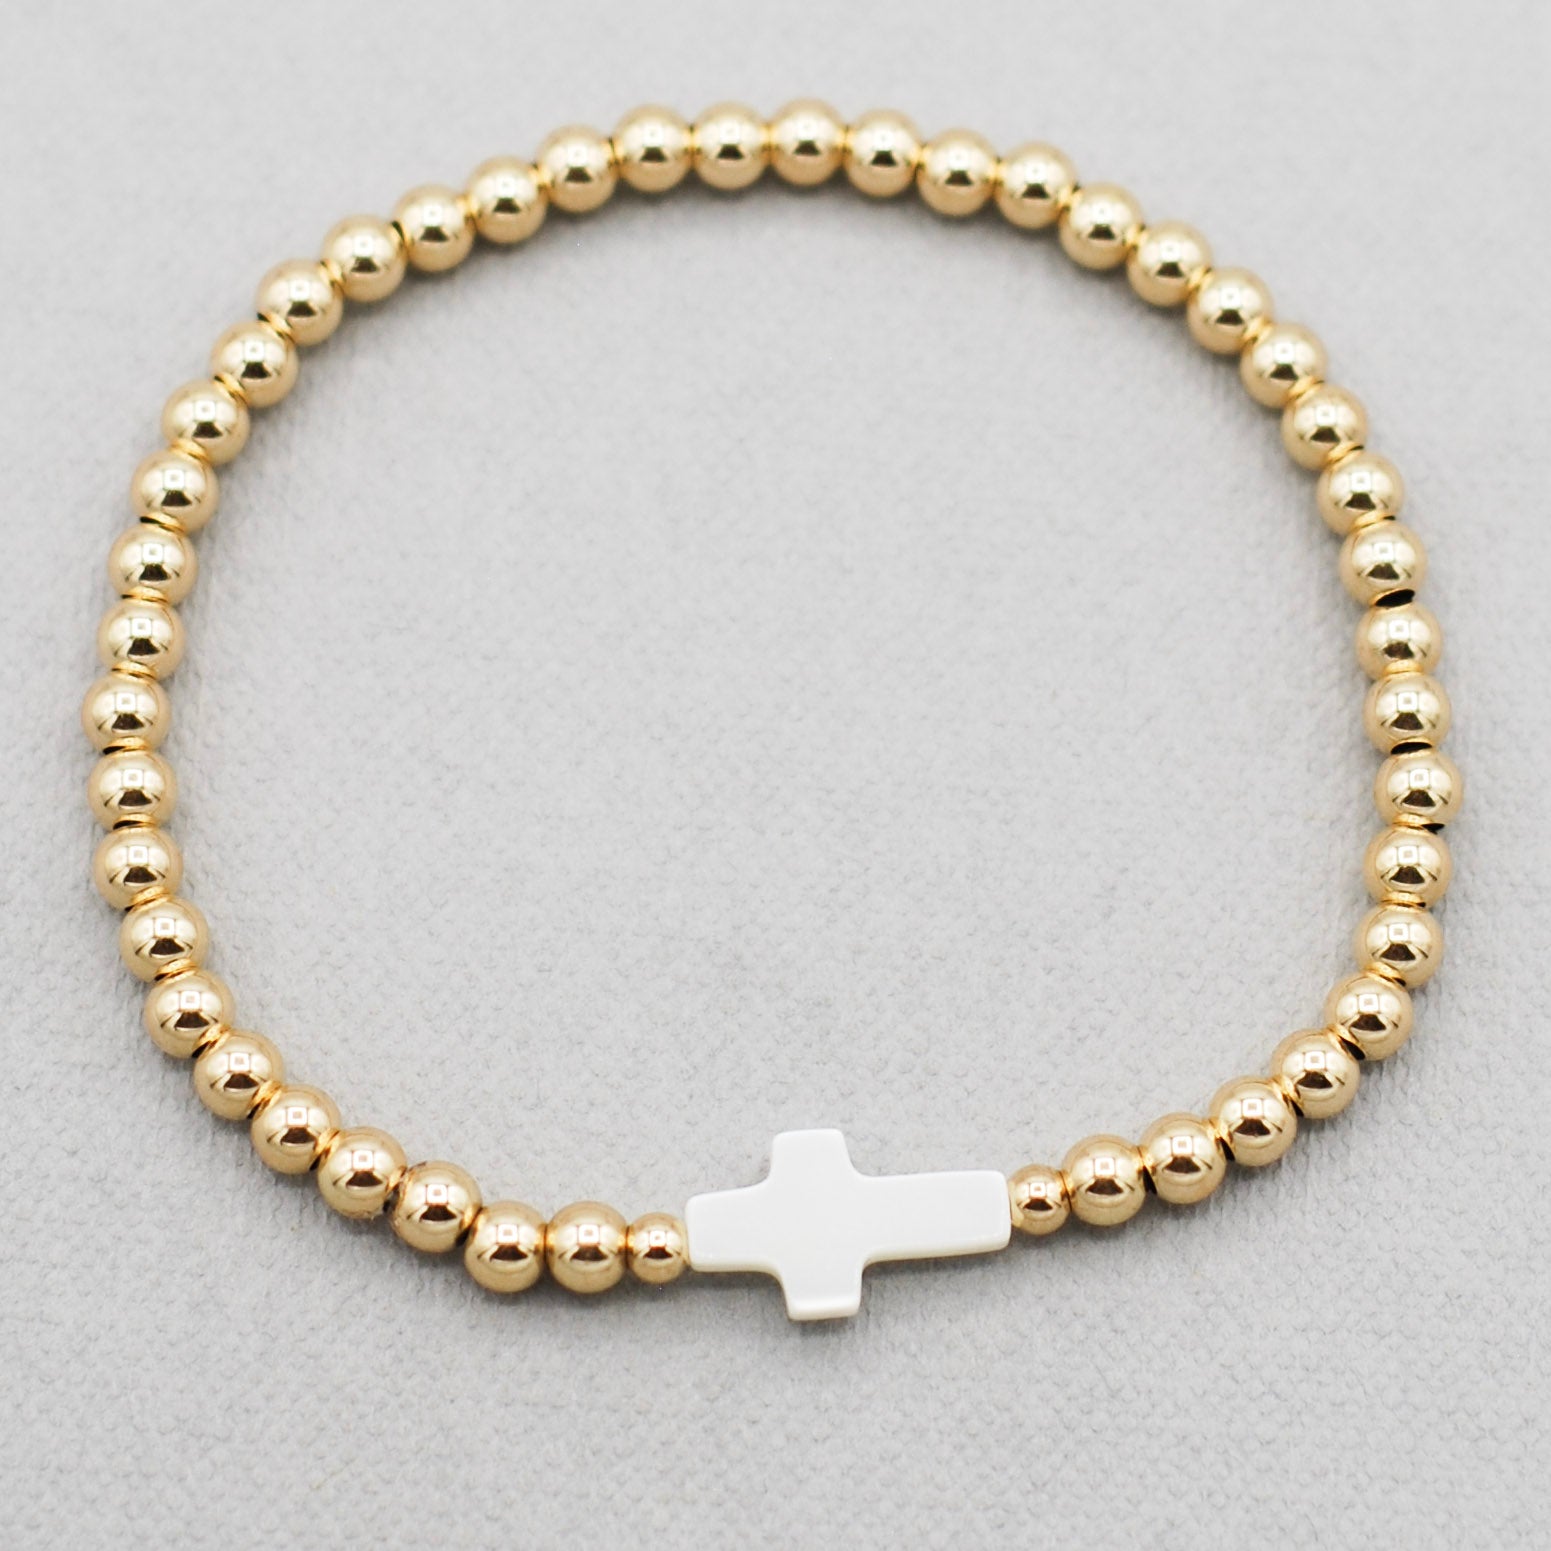 4mm Beaded Lux & Mother of Pearl Cross Bracelet